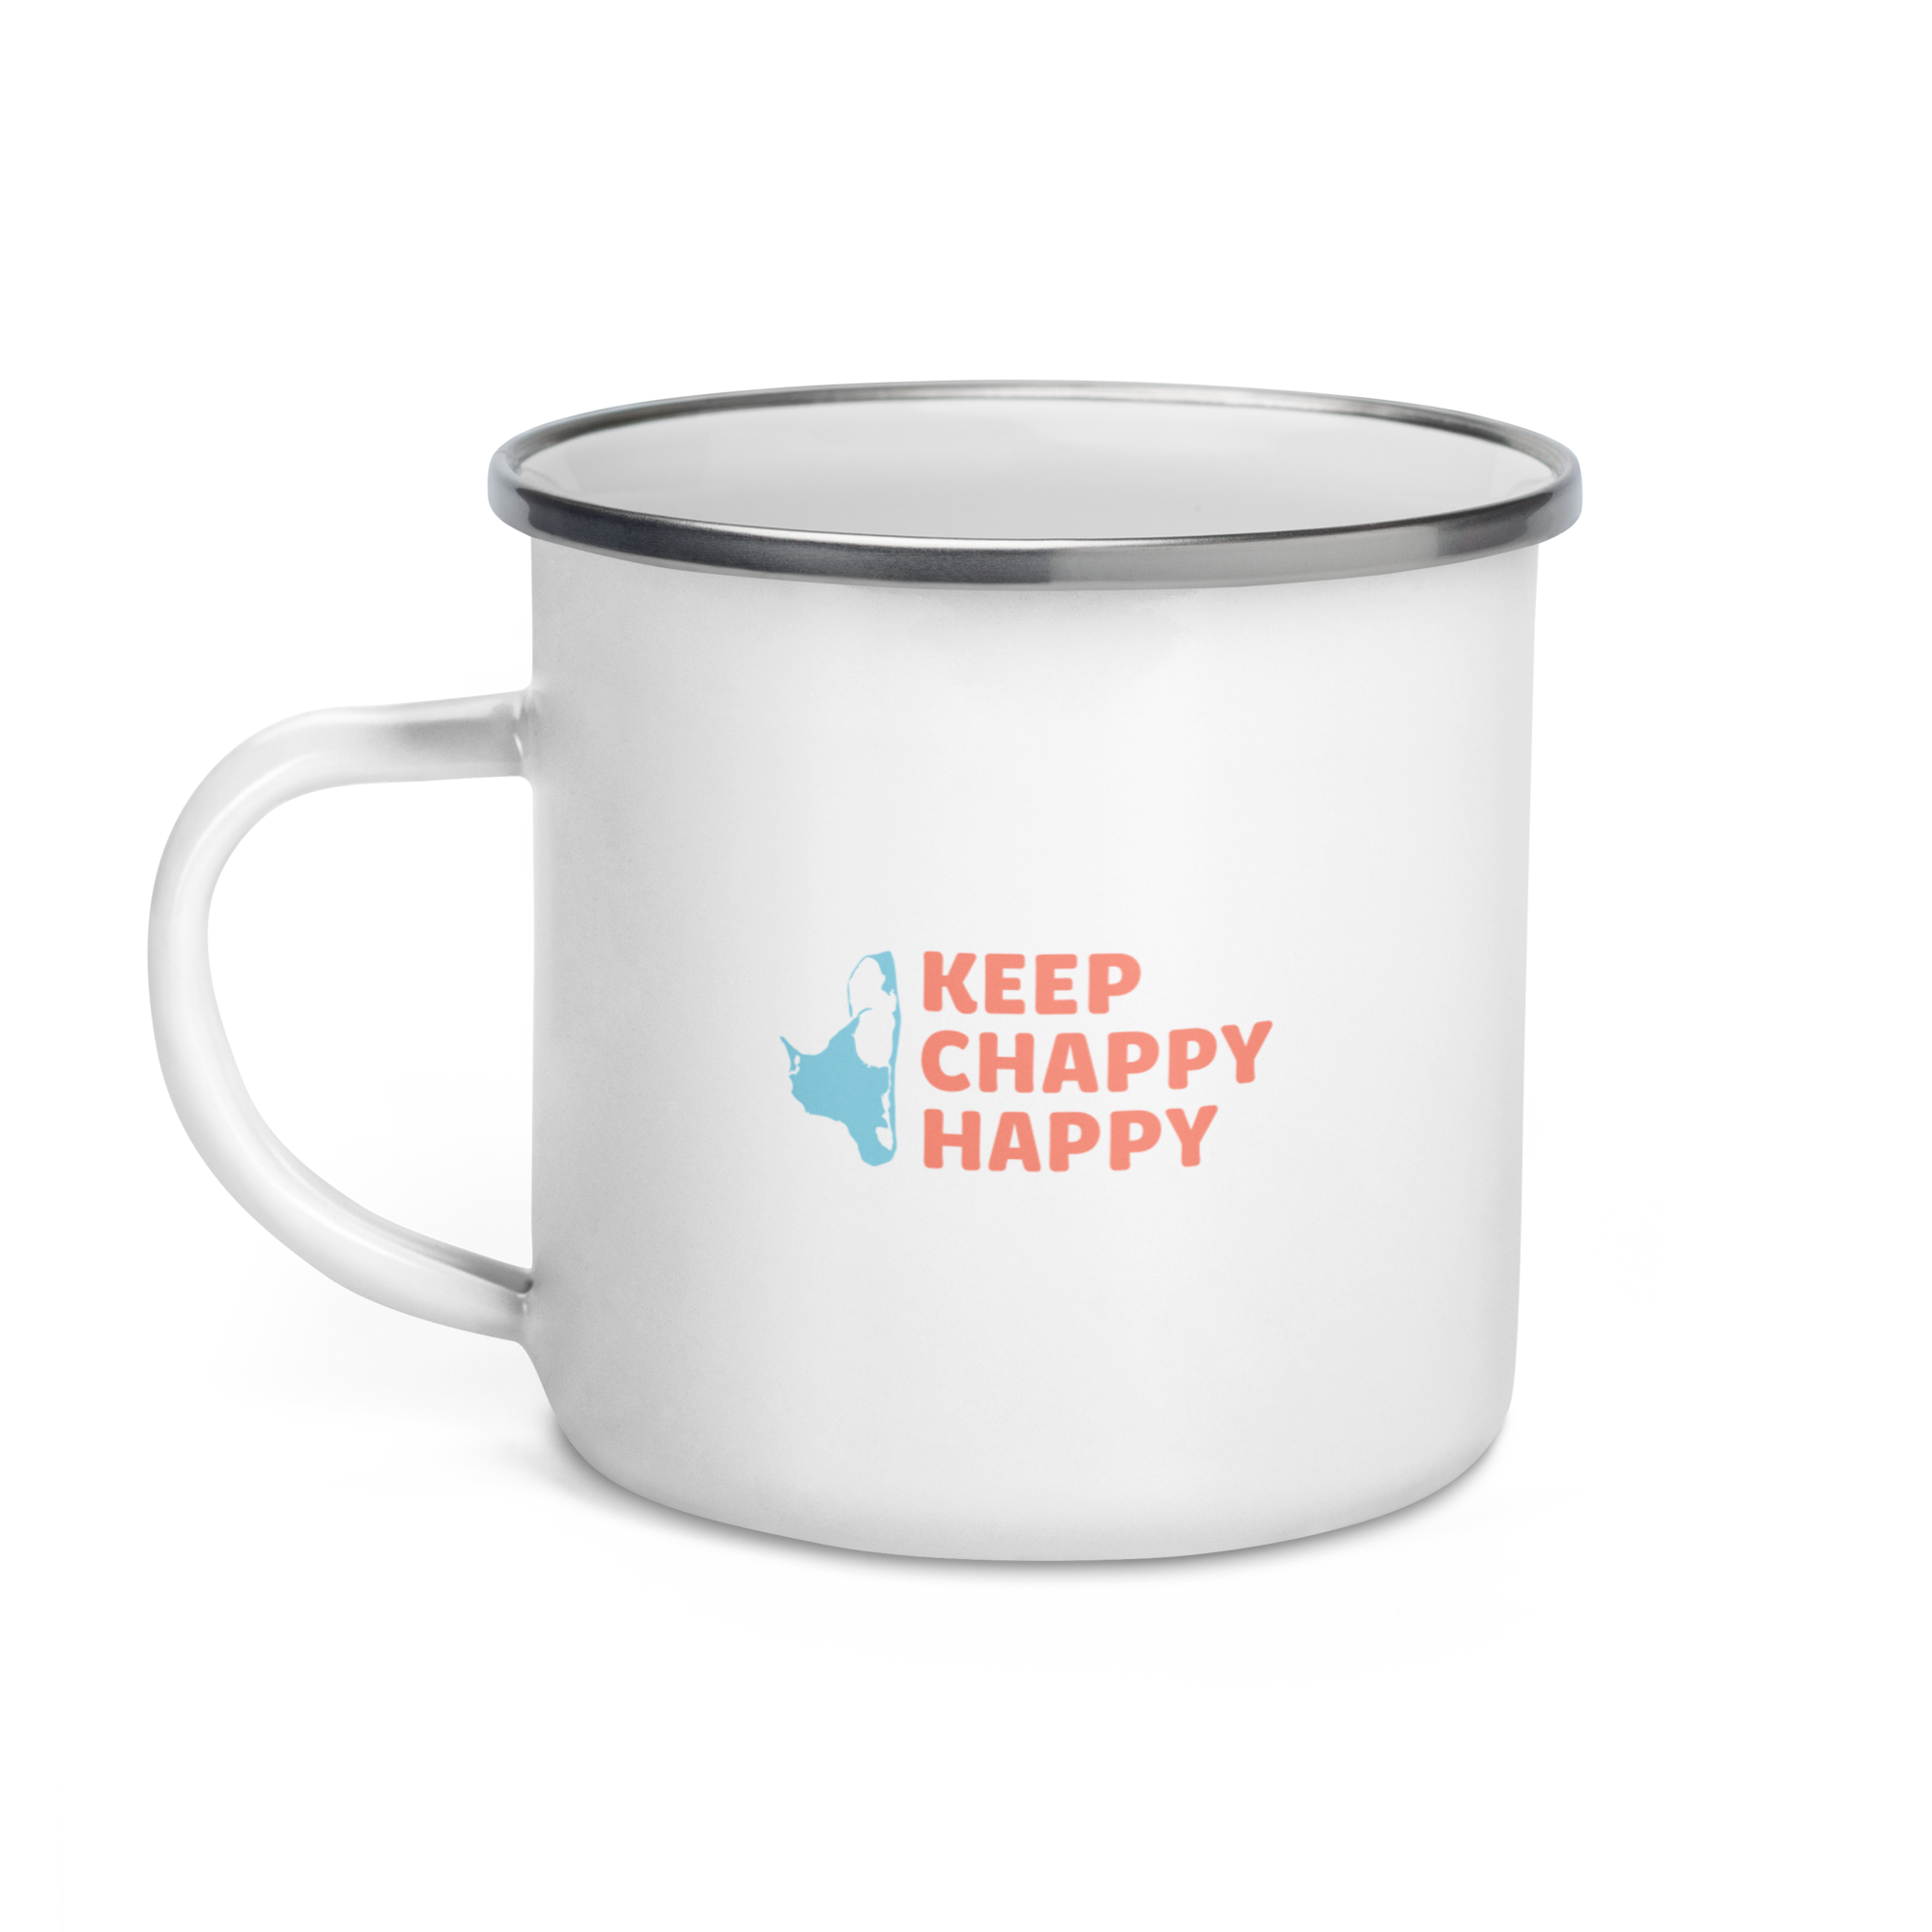 Keep Chappy Happy Mug